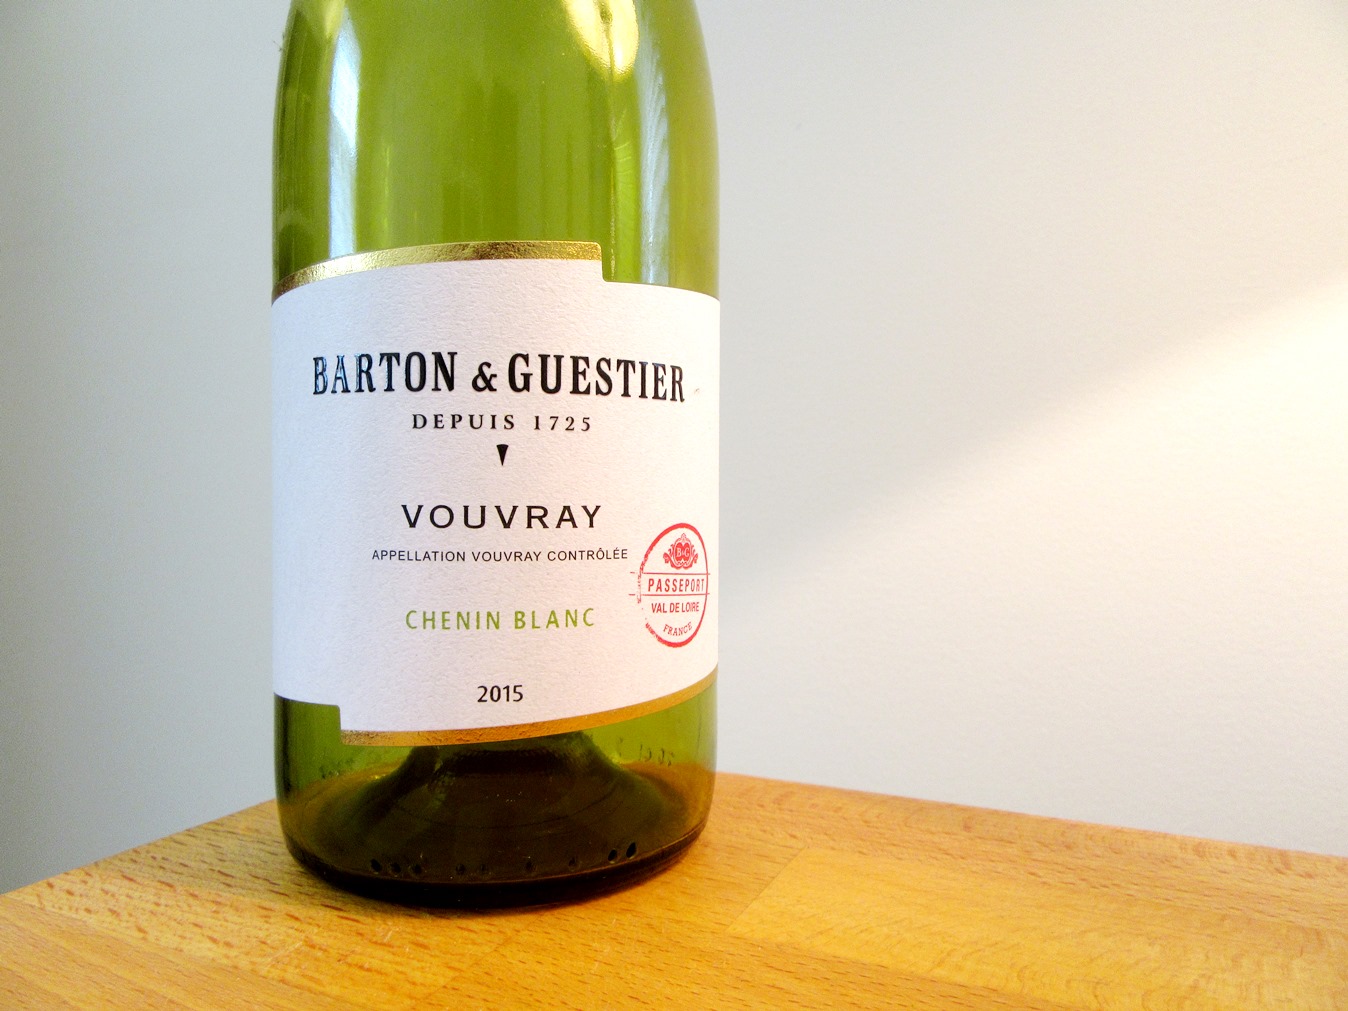 Barton & Guestier, Vouvray 2015, Loire, France, Wine Casual